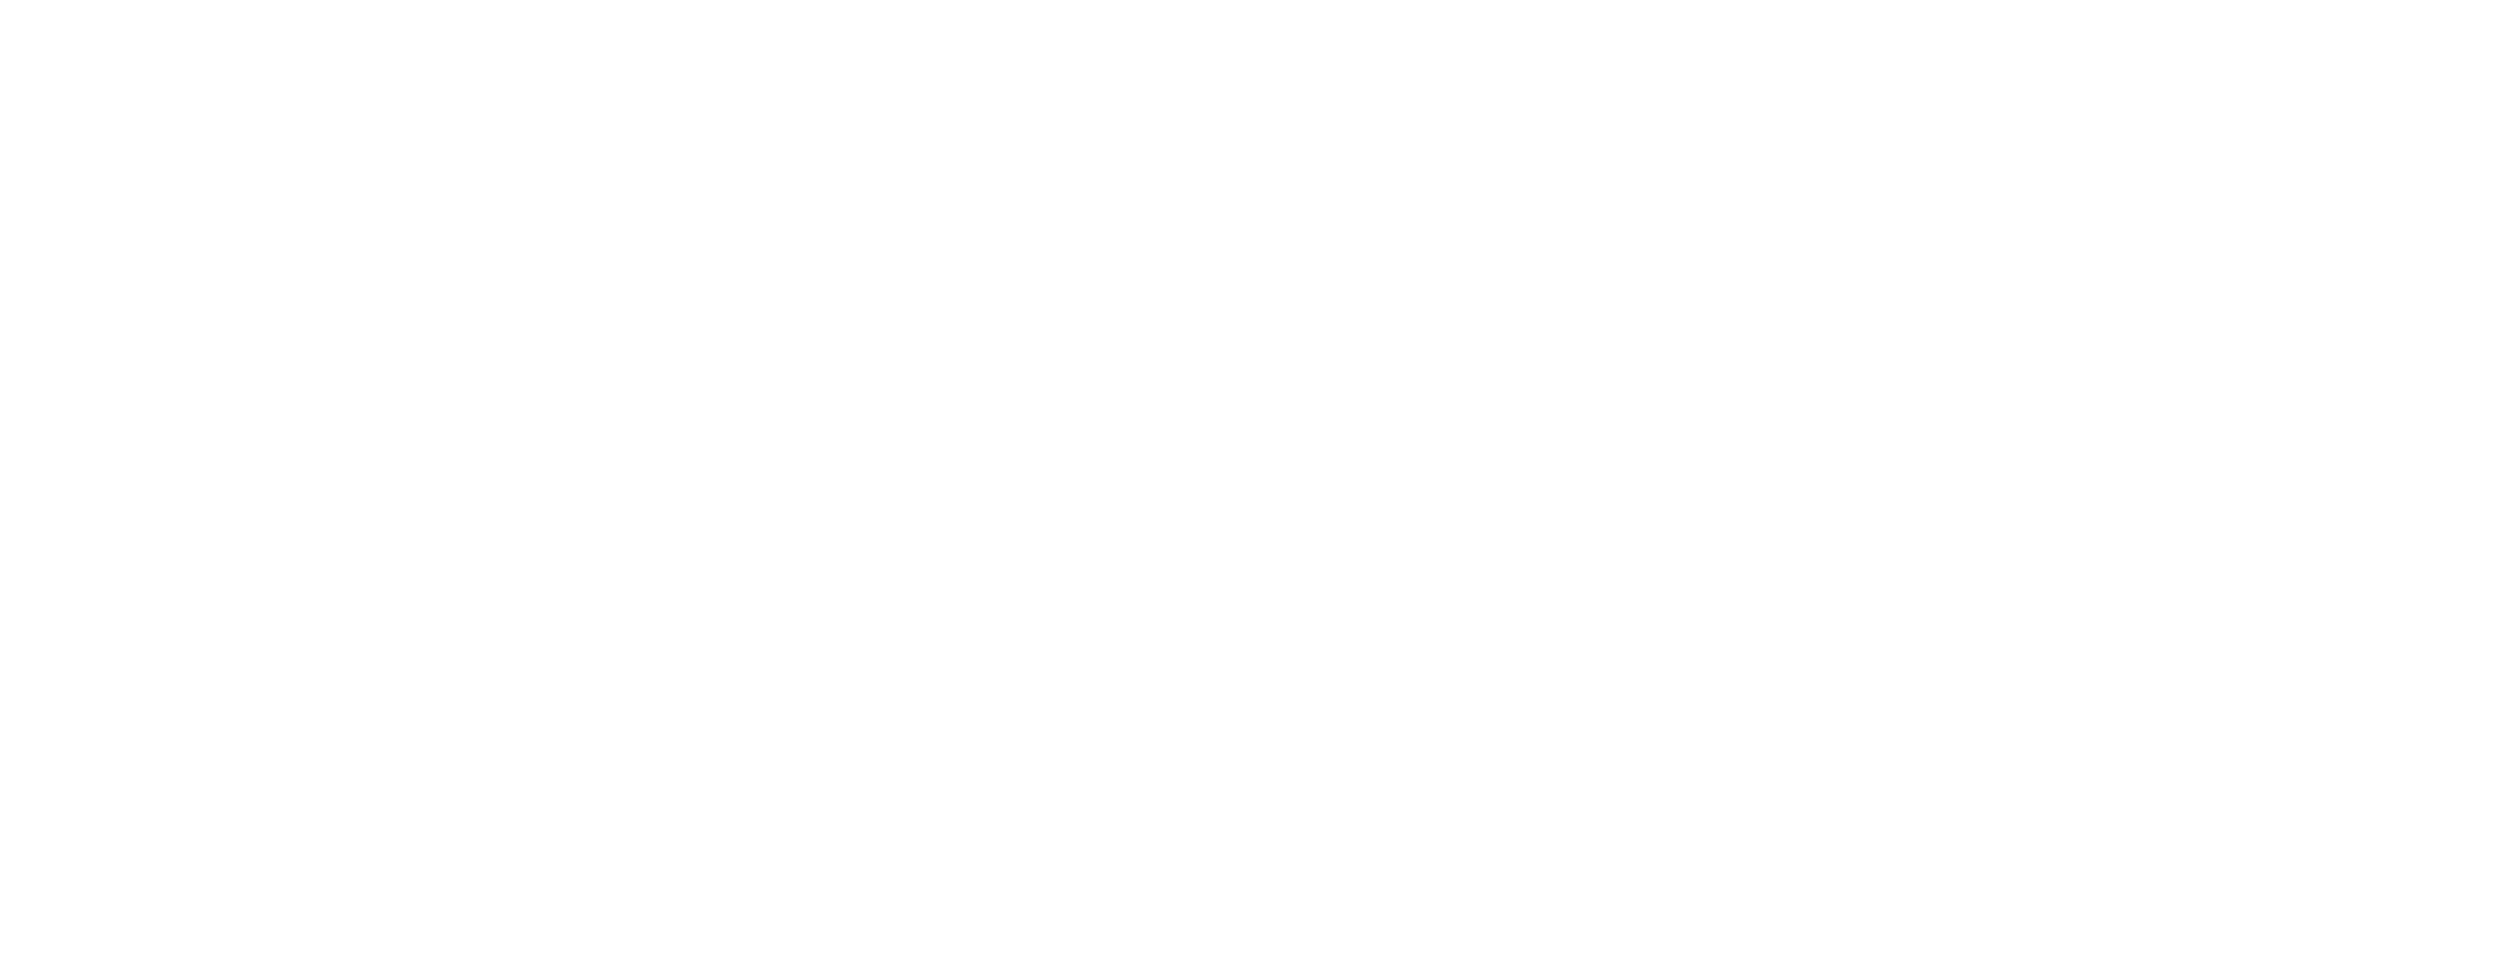 Dani Bartlett Photography logo white final-02 copy